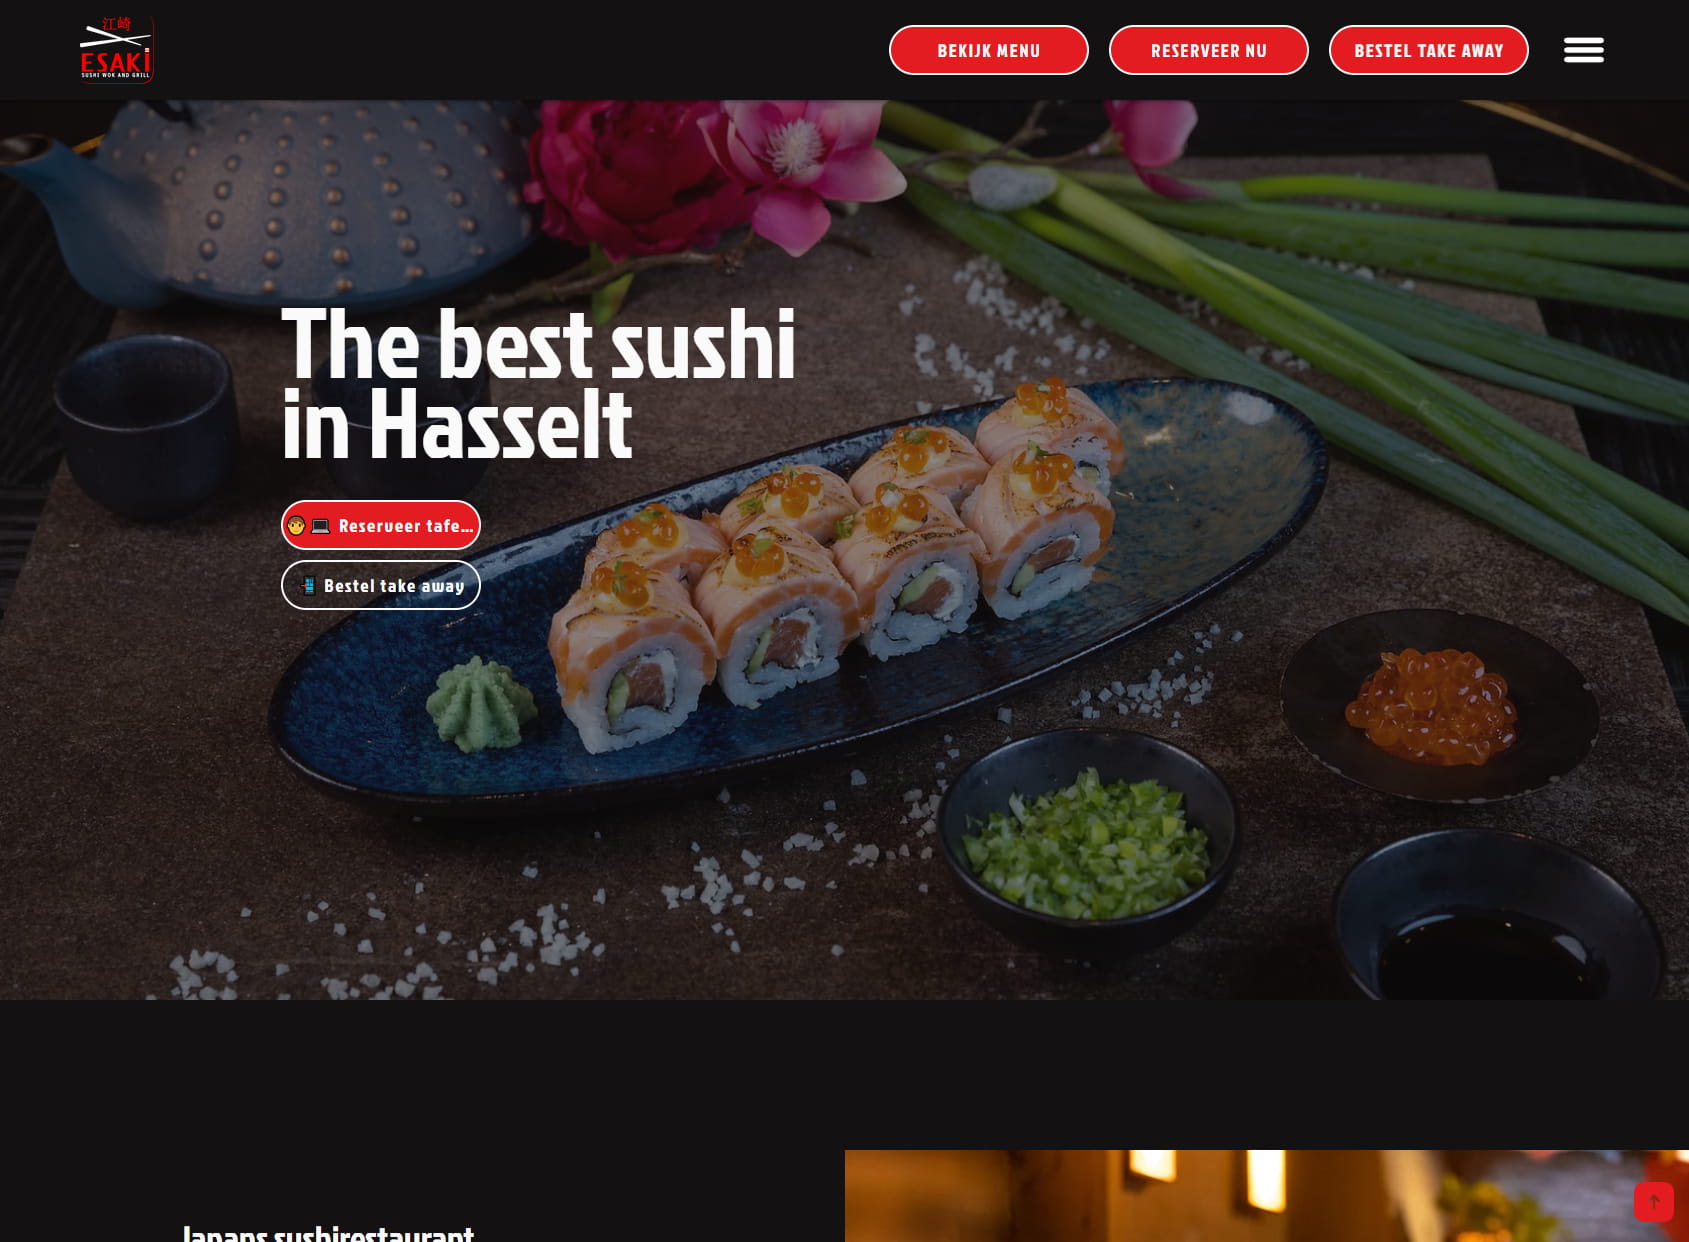 Japans restaurant | Esaki Sushi Hasselt